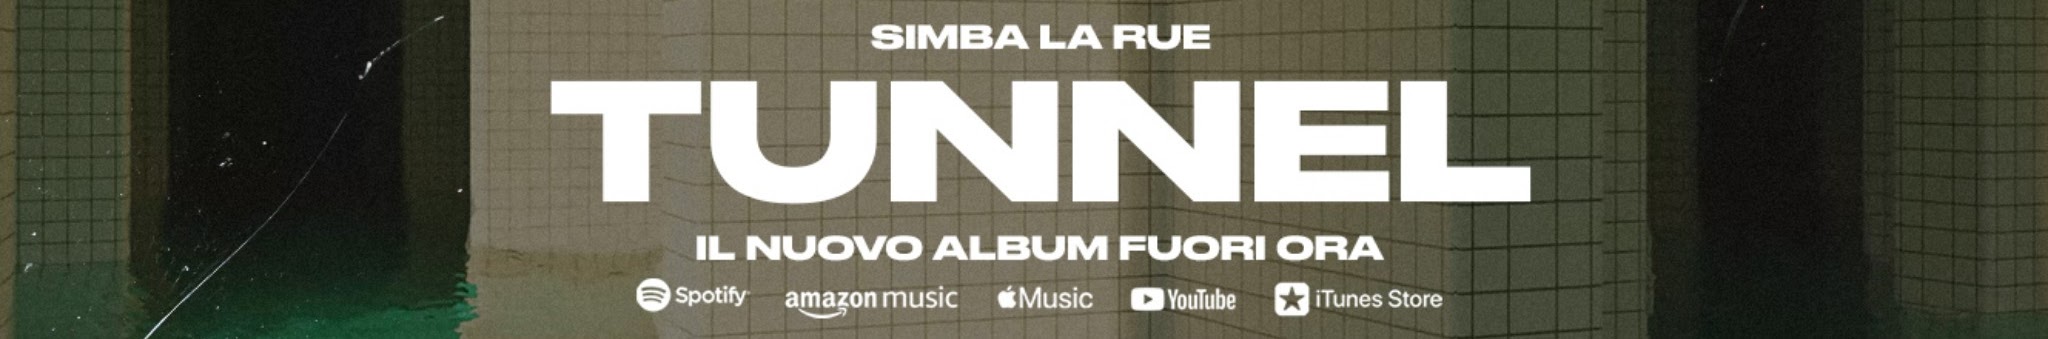 SIMBA LA RUE - TUNNEL (Lyrics) #short #shorts #tunnel #simbalarue